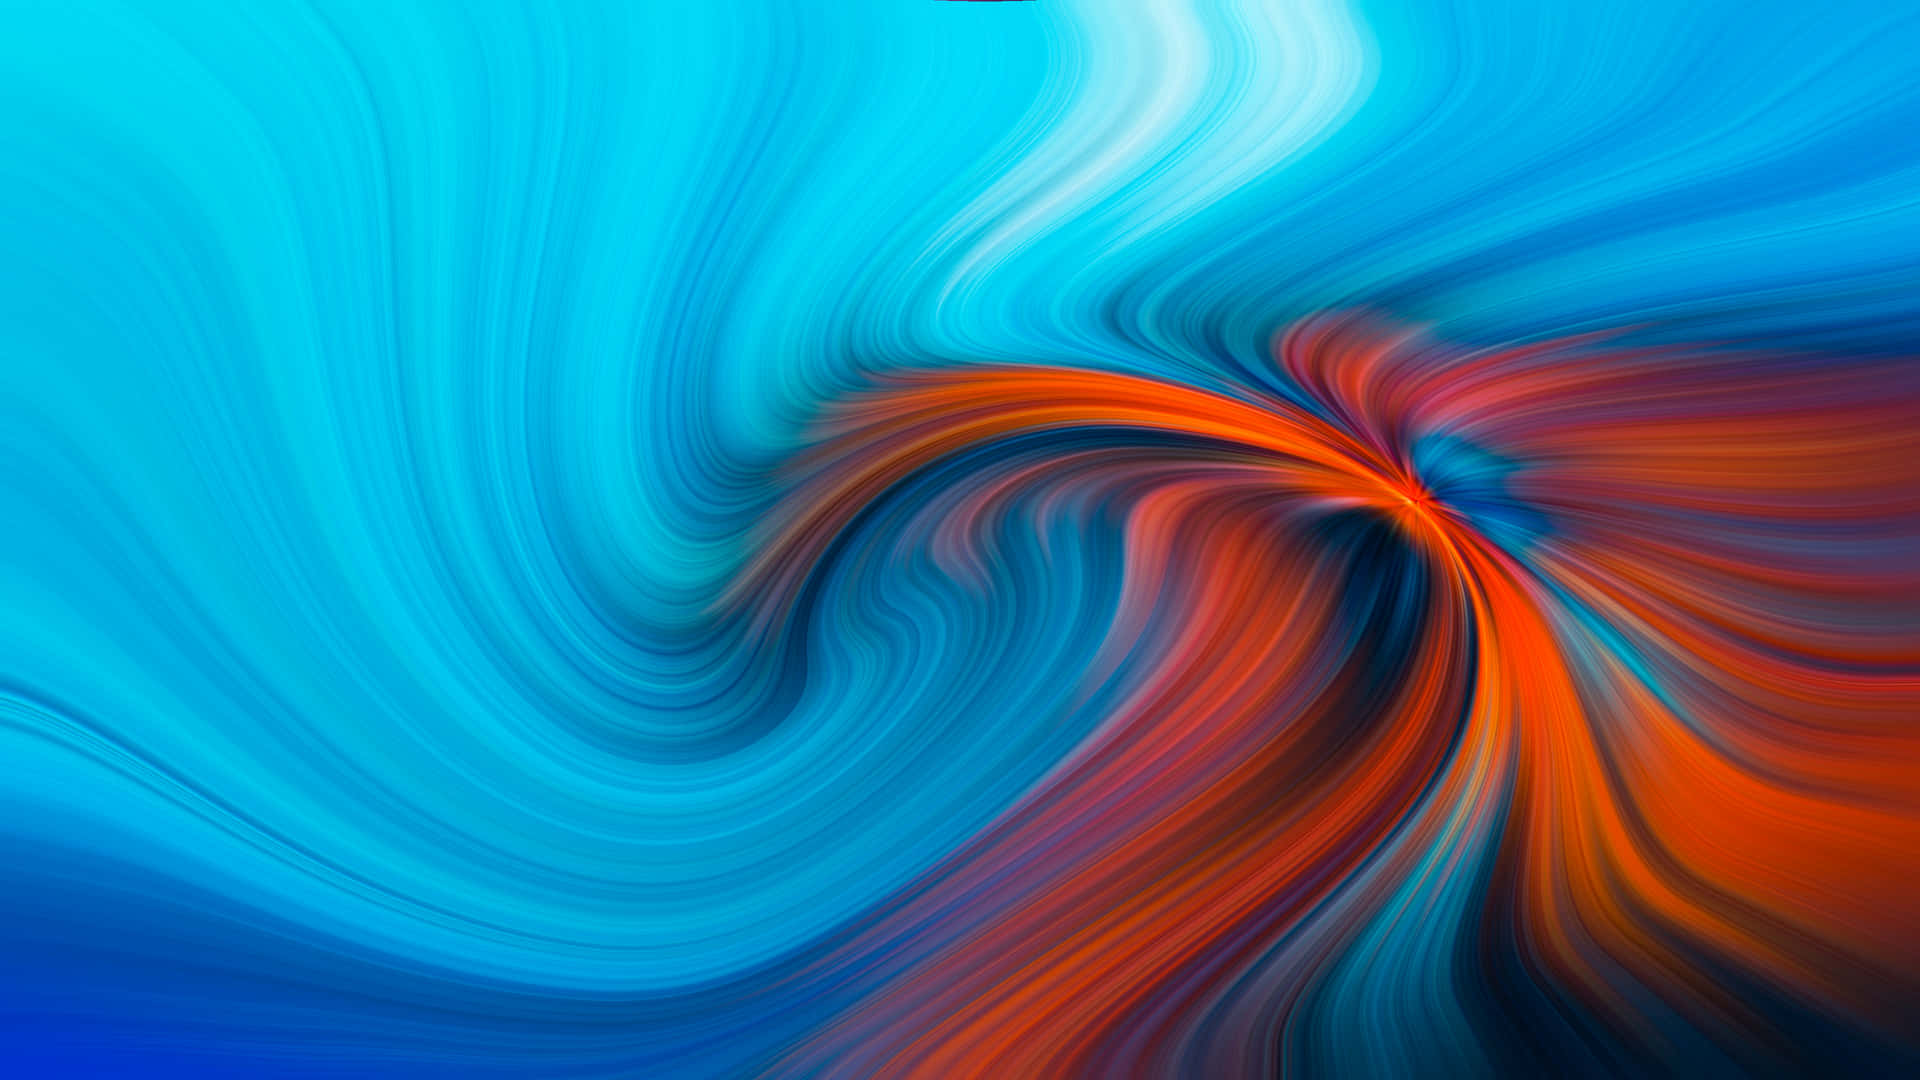 Dynamic Blue and Orange Background